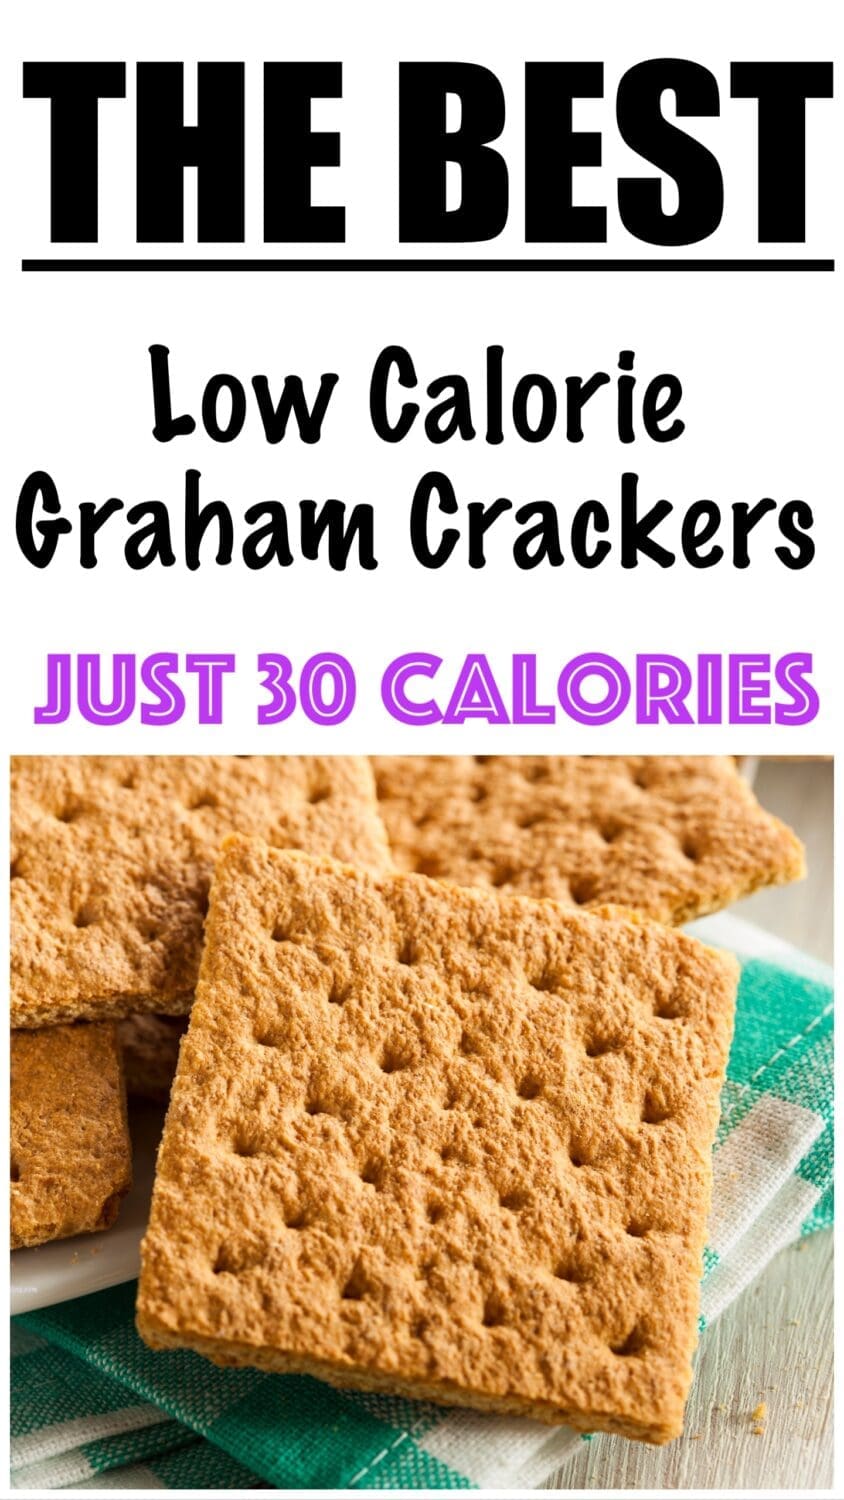 Low Calorie Graham Crackers Recipe